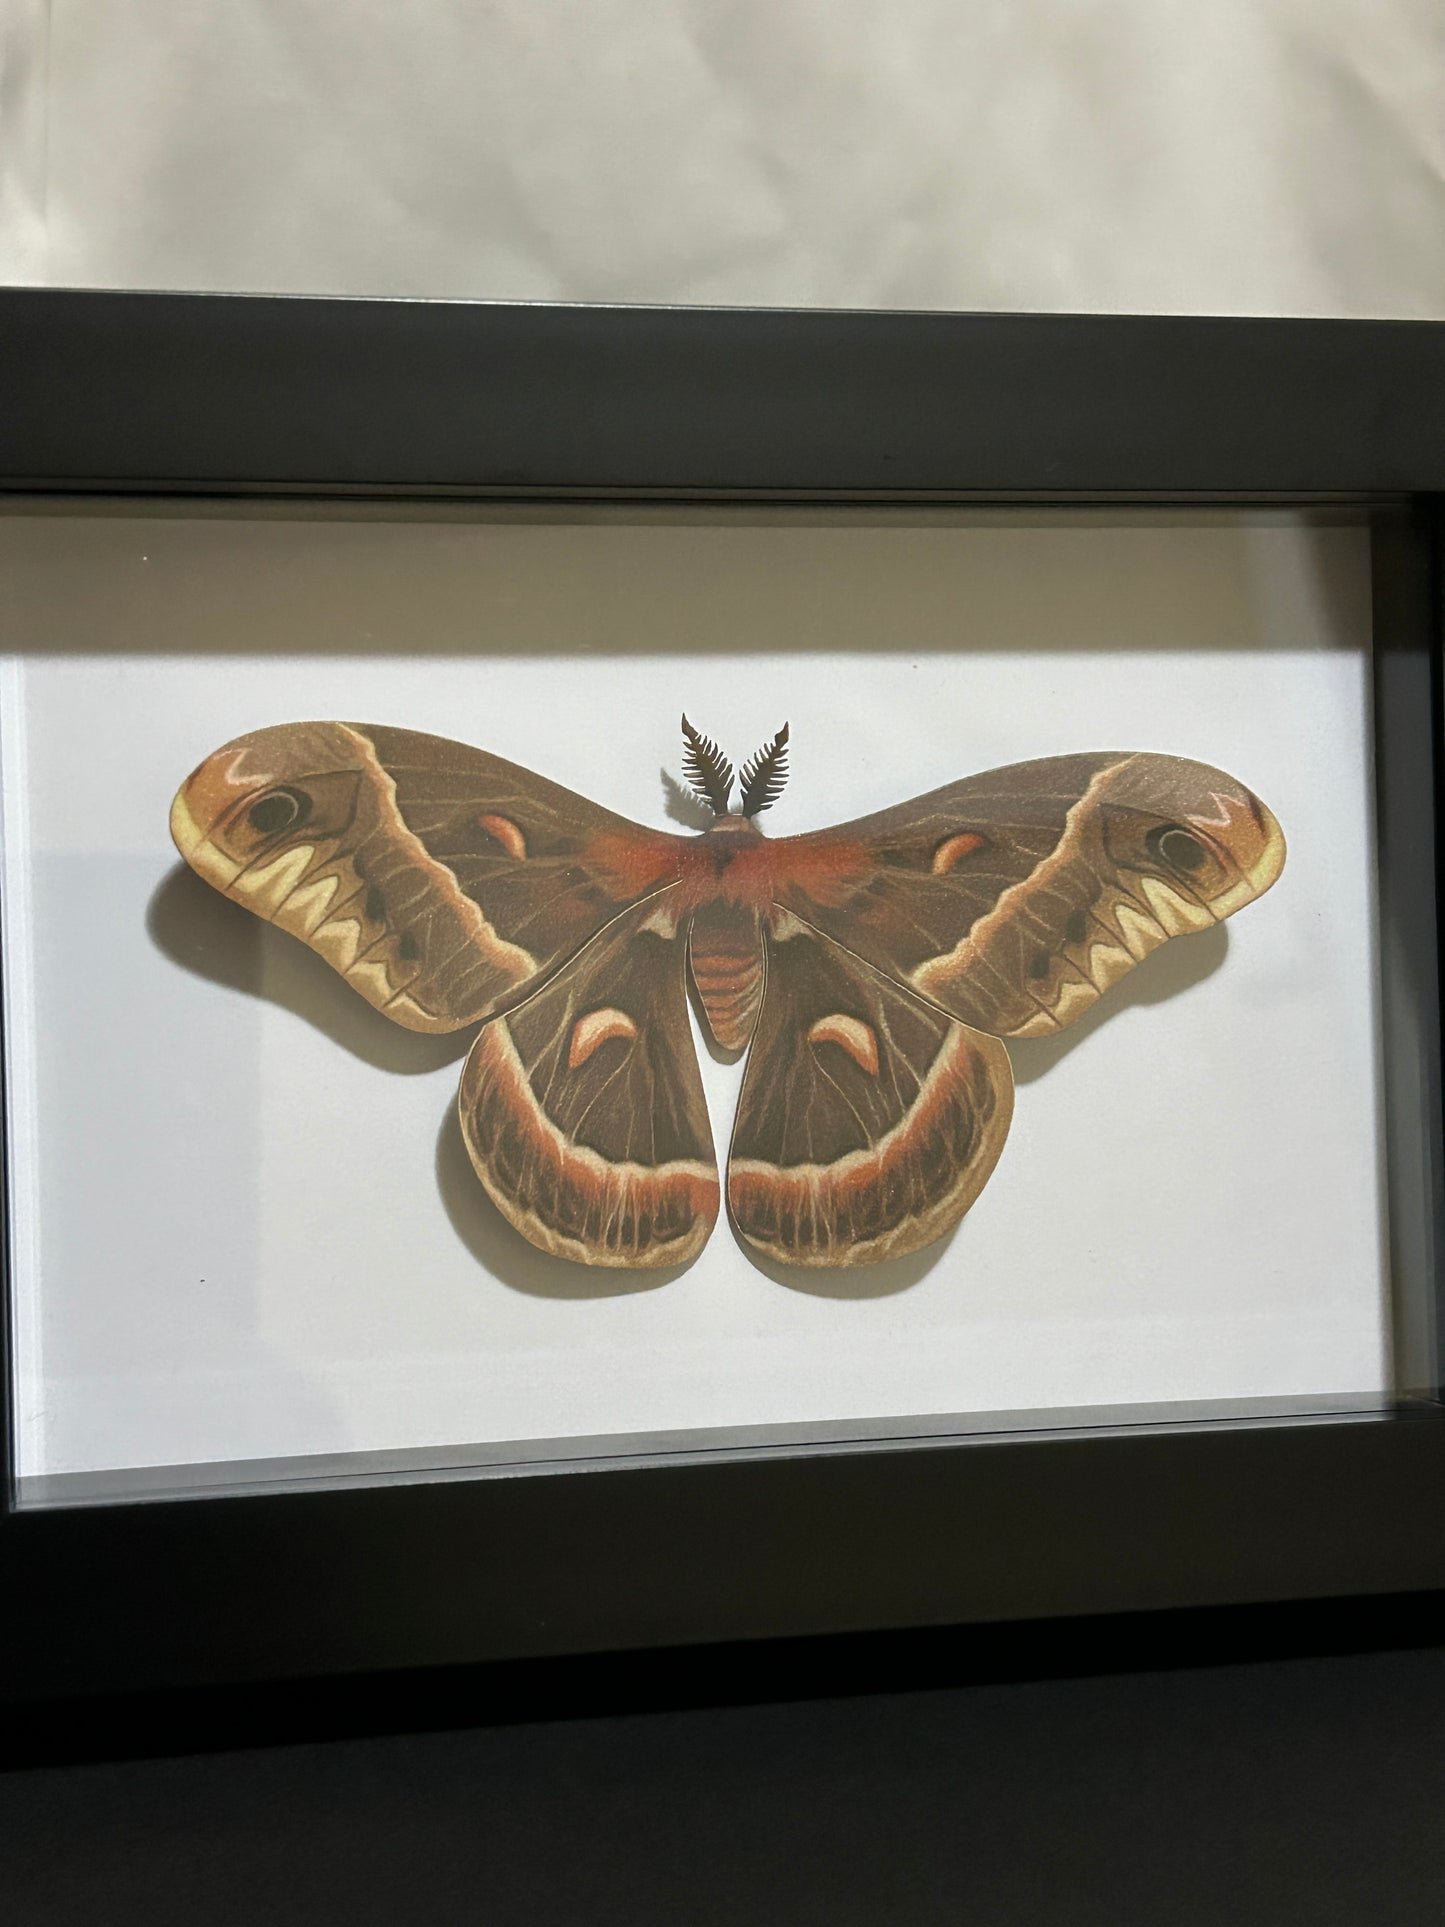 Replica Cecropia Moth (Hylaphora cecropia) in a Frame